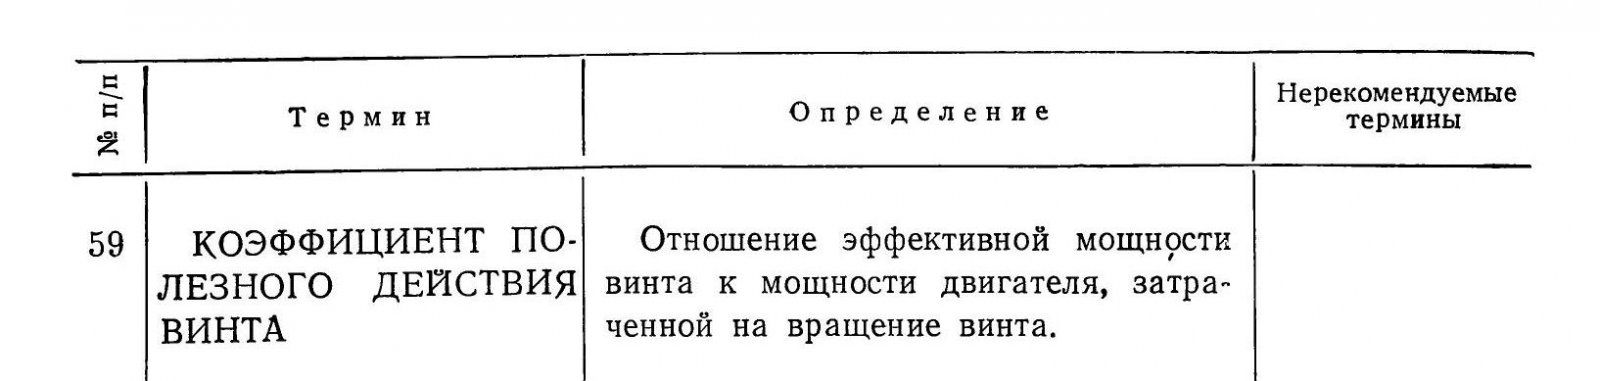 Akad_nauk_1954_Terminologija_vozdushnyh_vintov_i_vertoljotov_020.jpg